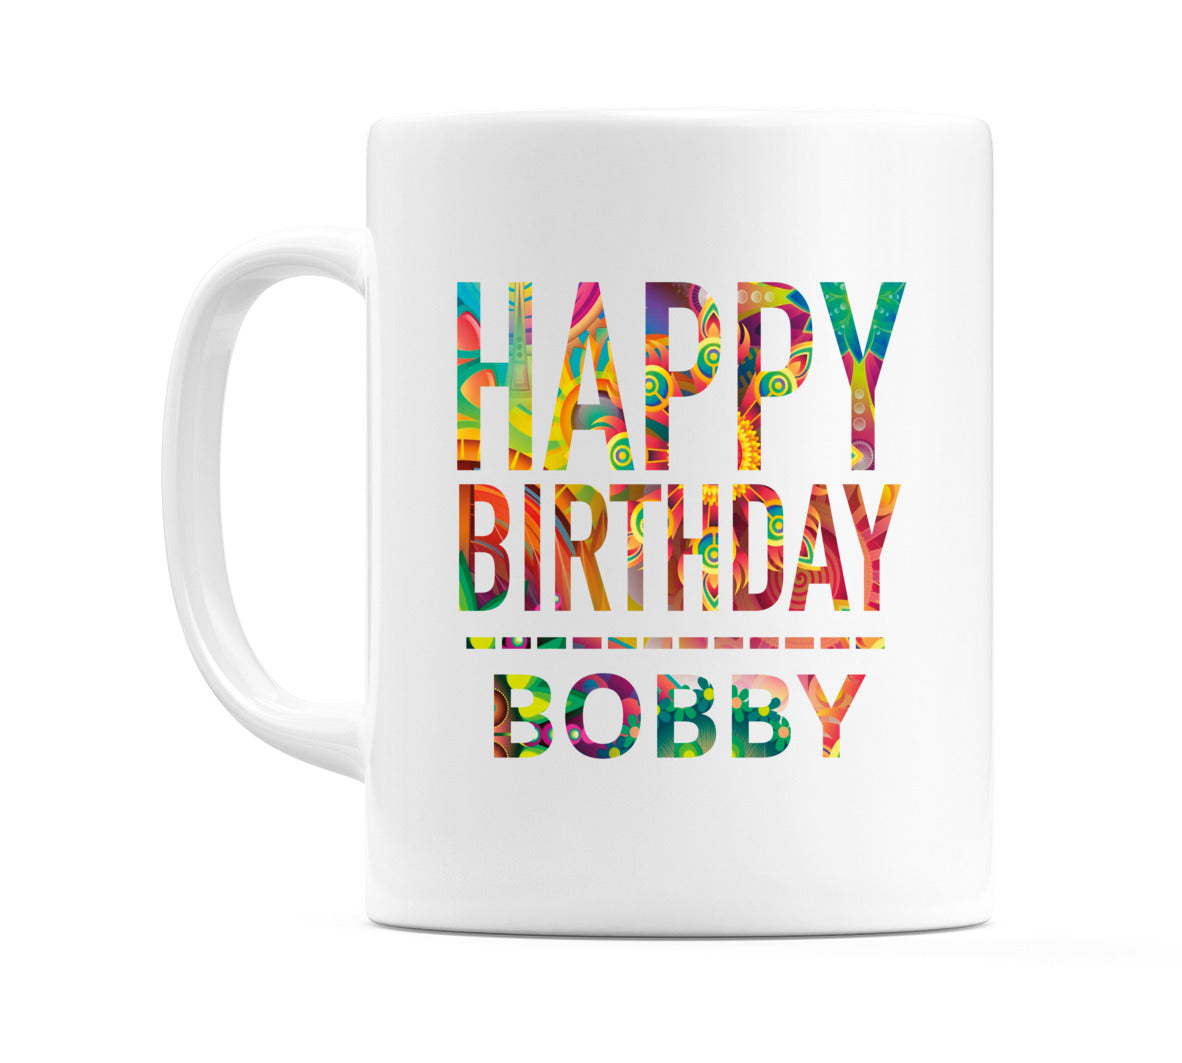 Happy Birthday Bobby (Tie Dye Effect) Mug Cup by WeDoMugs